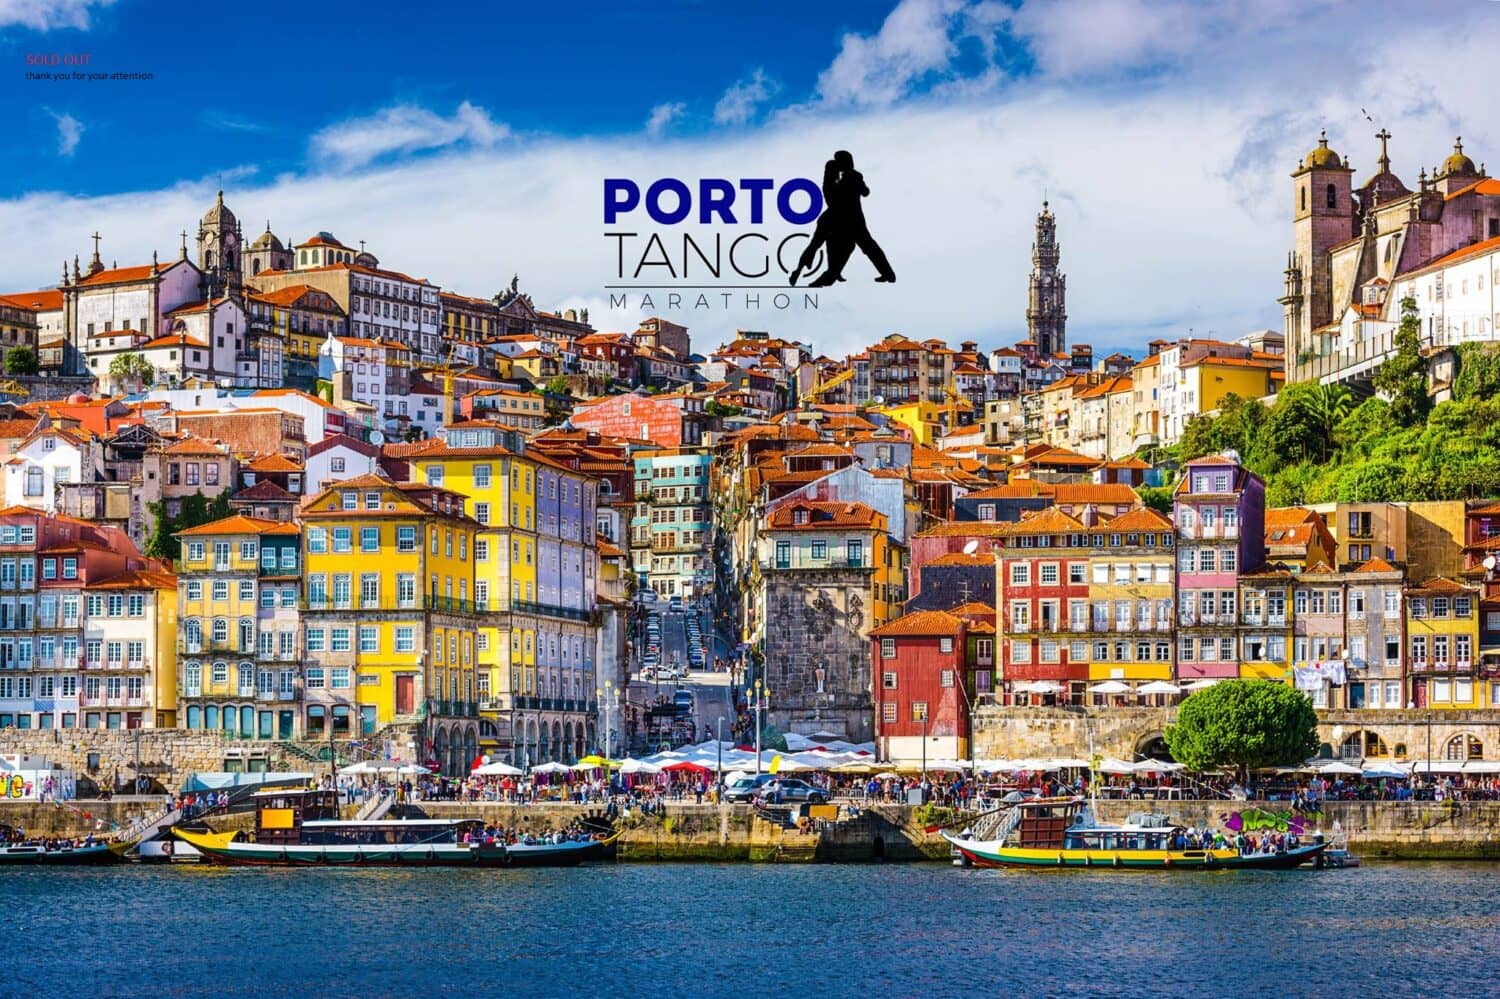 Porto Tango Marathon